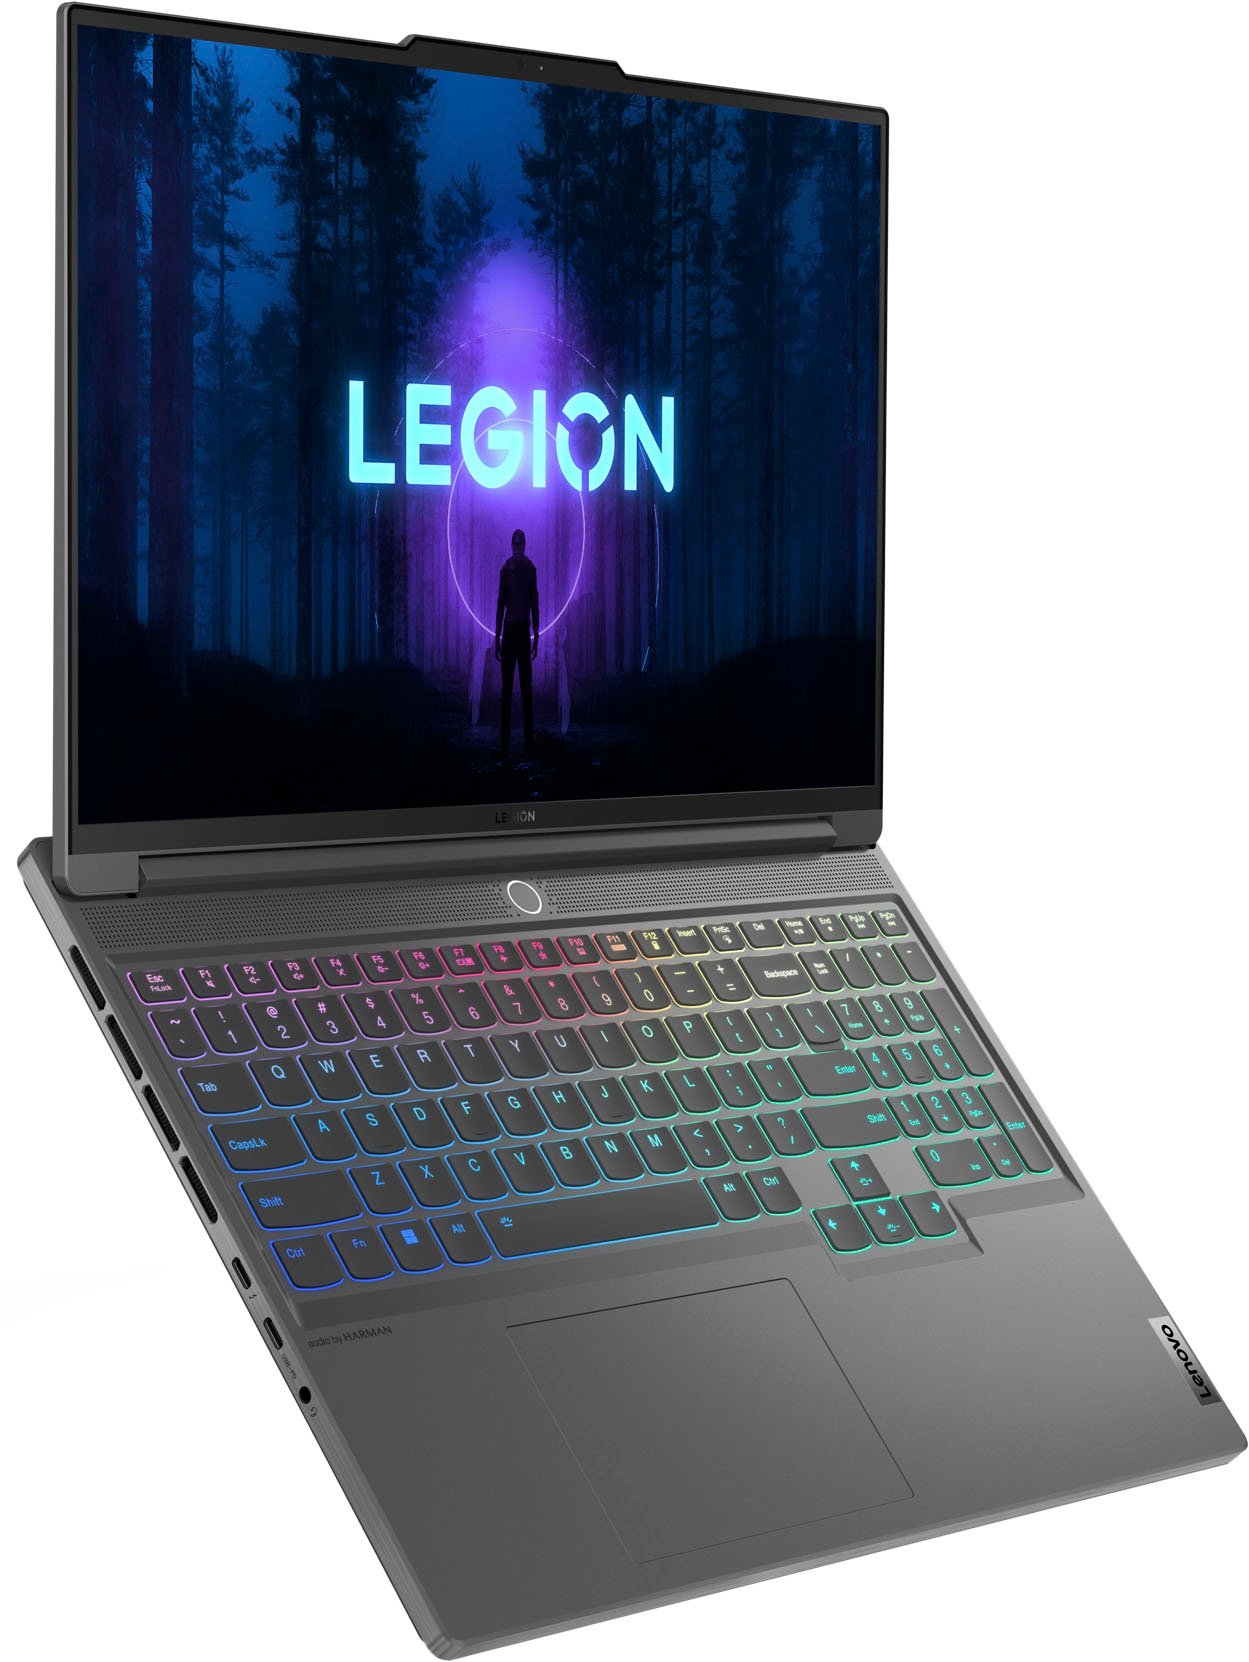 Lenovo Legion Pro 7i Gen 8 review: Blazing performance, good price